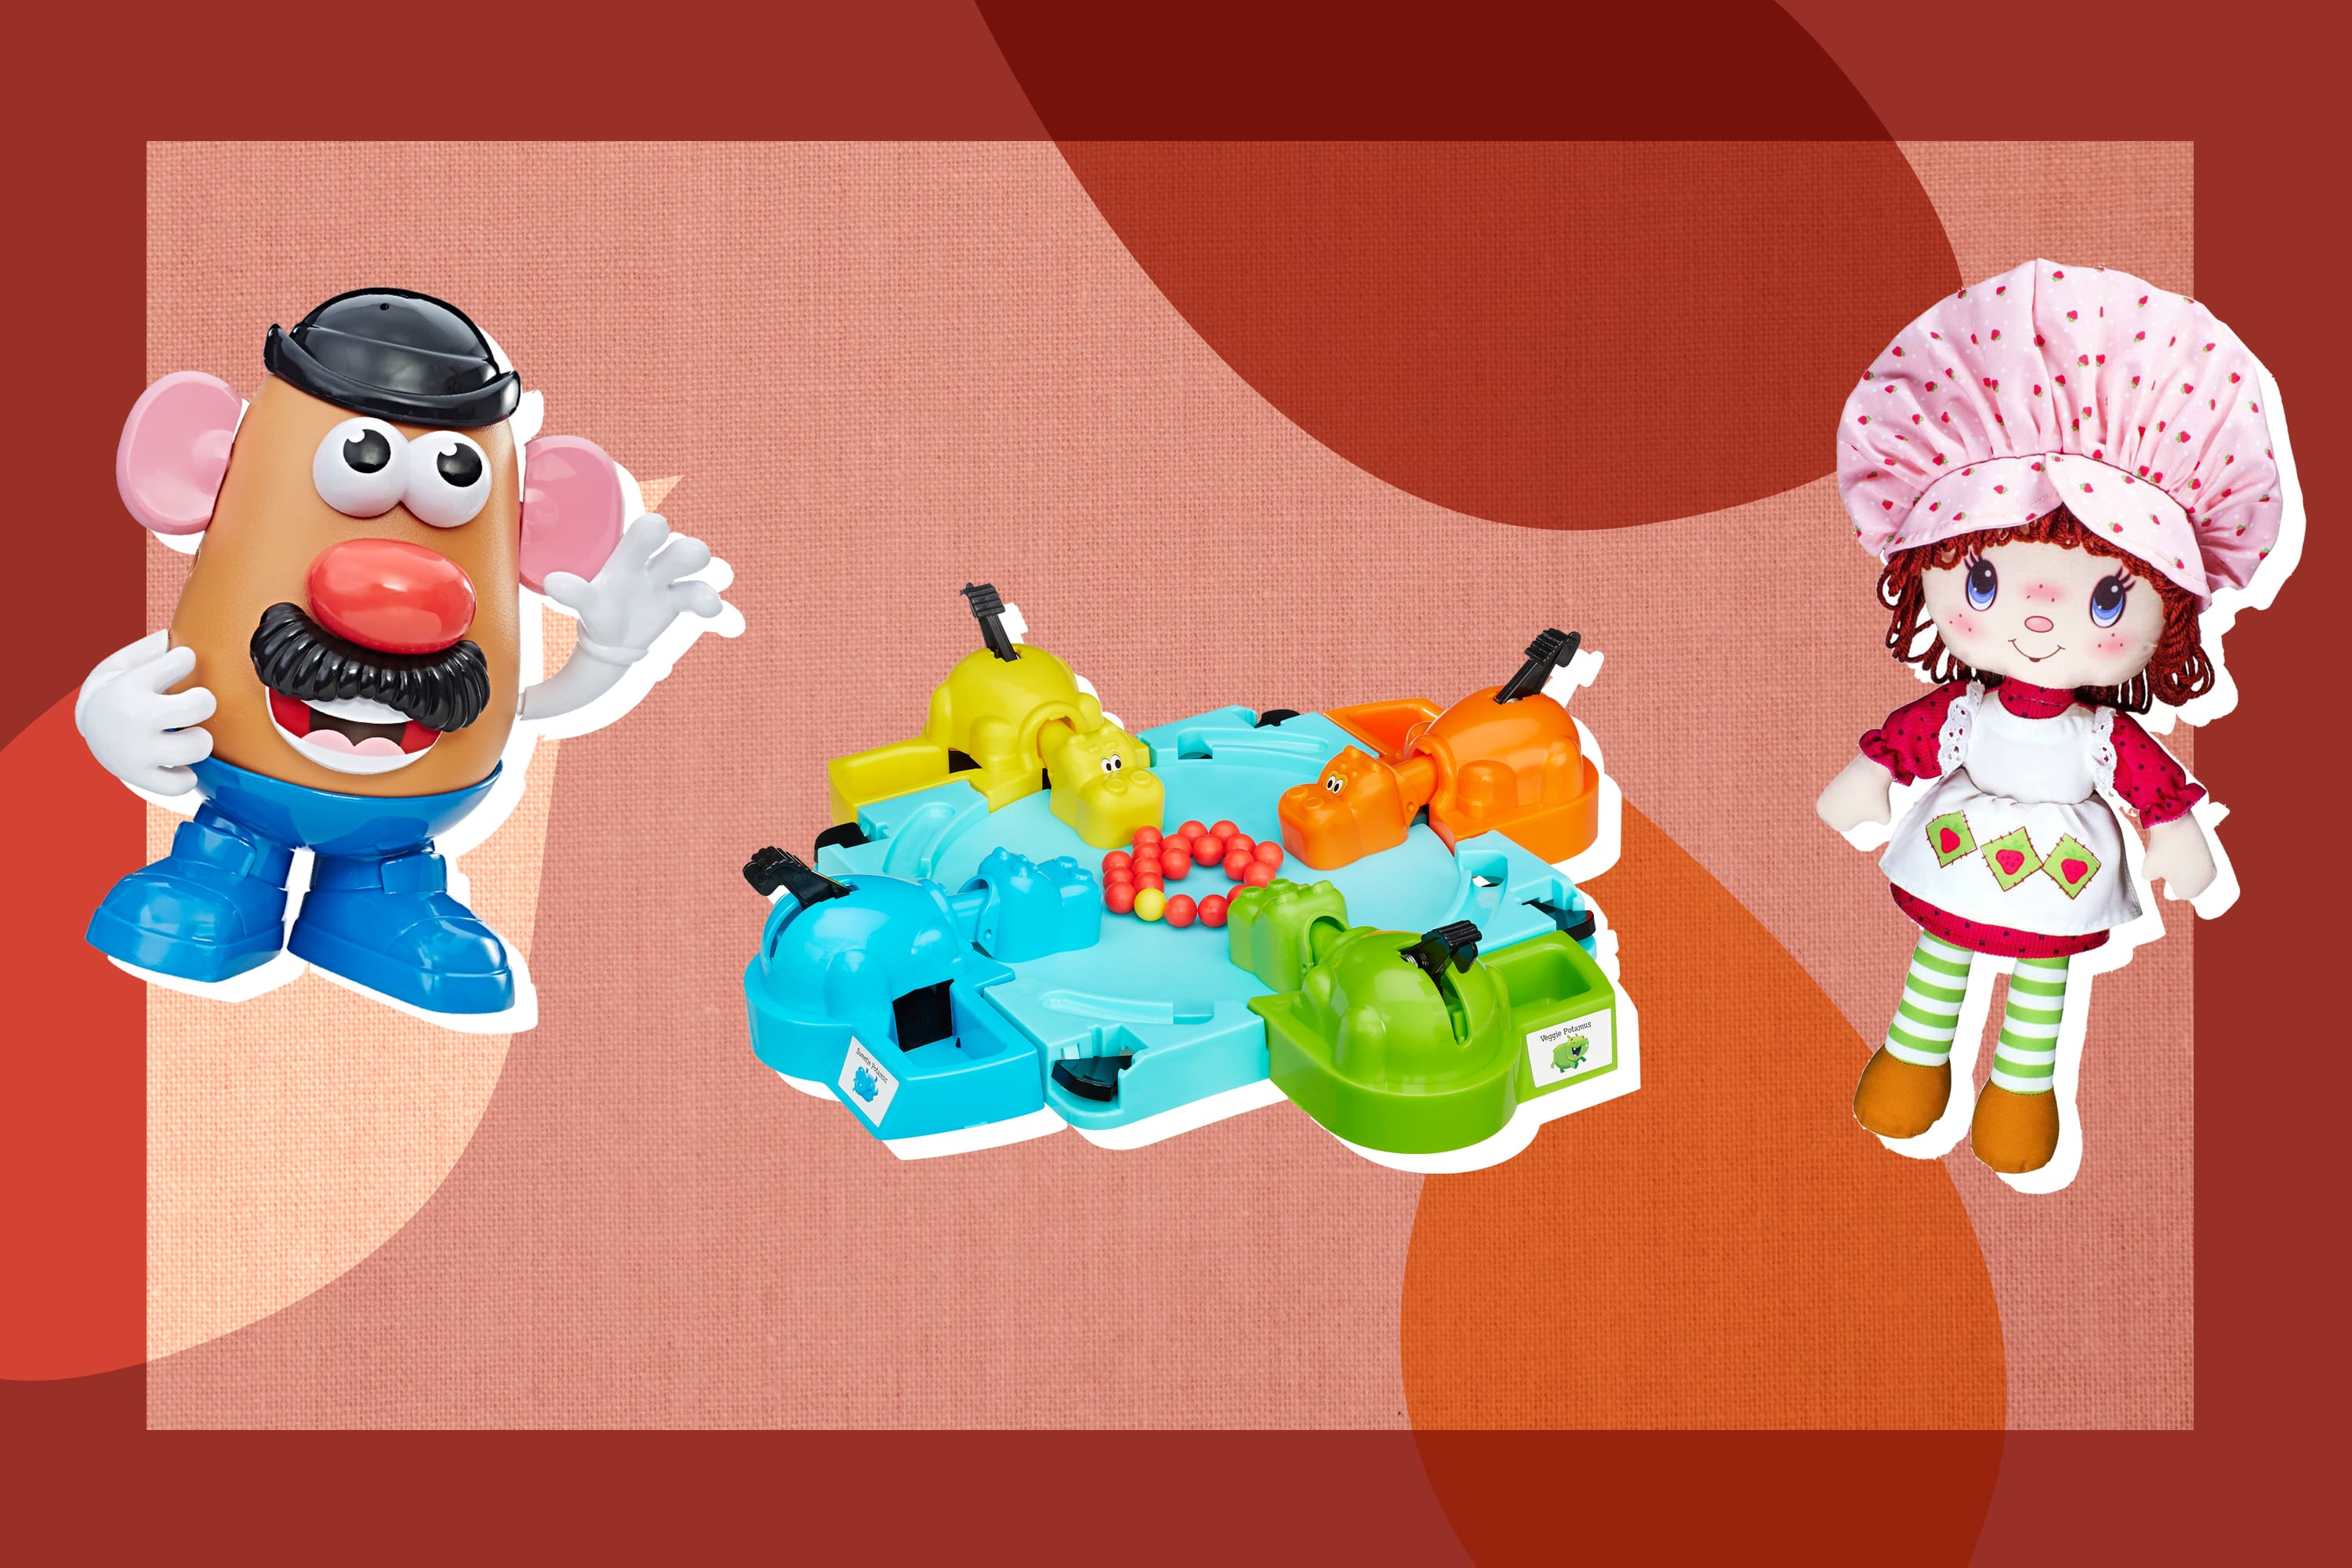 Potato Head Create Your Potato Head Family Toy Set, Great Gift for